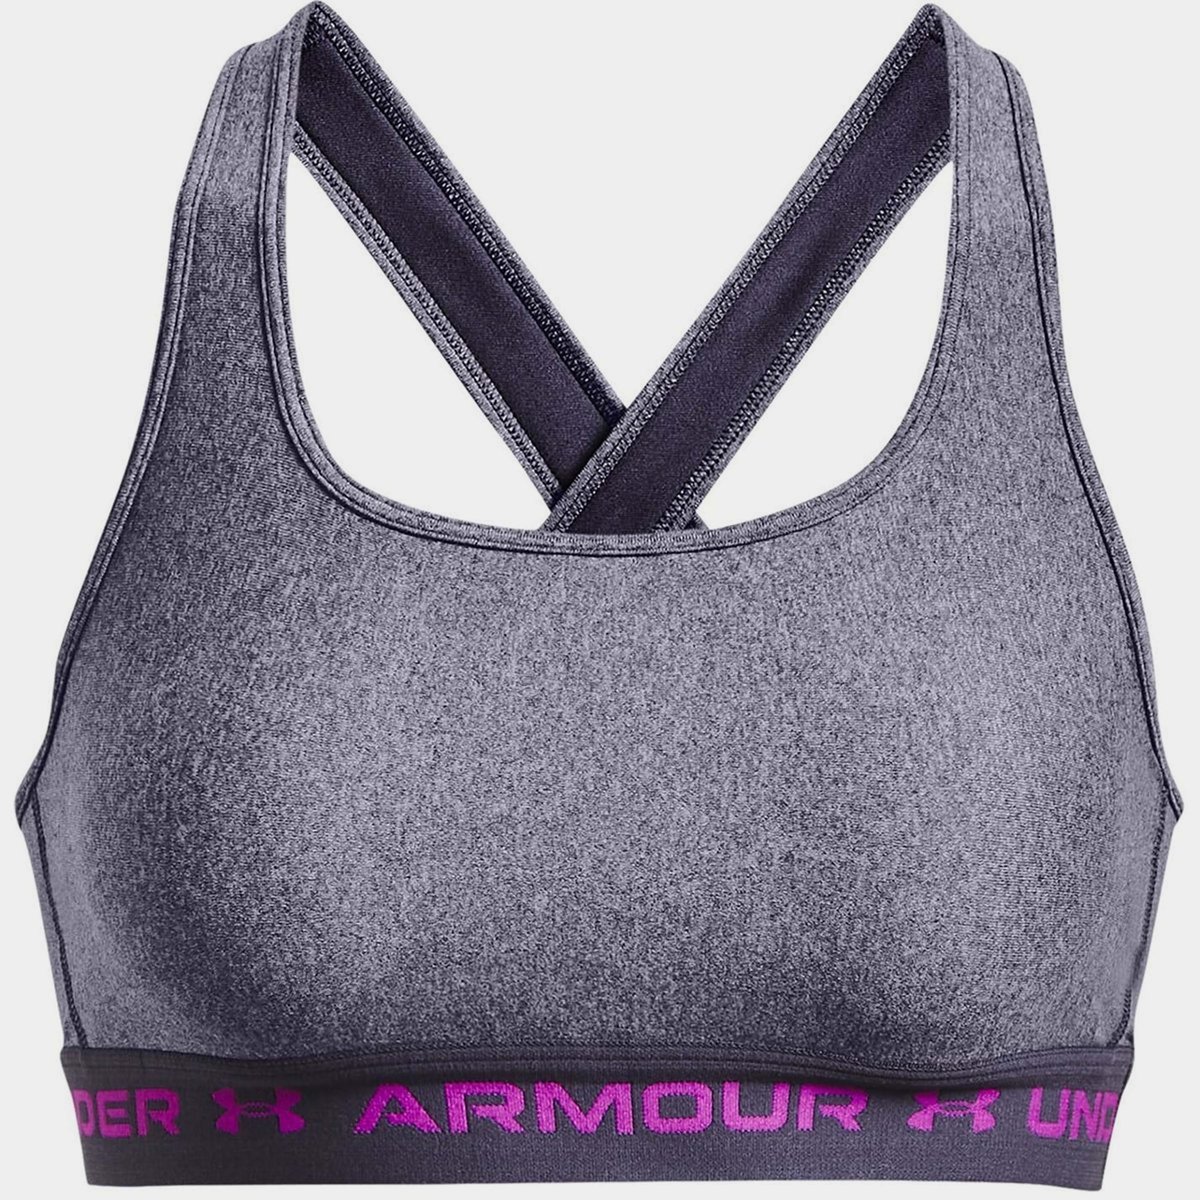 NWT Womens UNDER ARMOUR Sports Bra Size XS 0-2 Medium Support